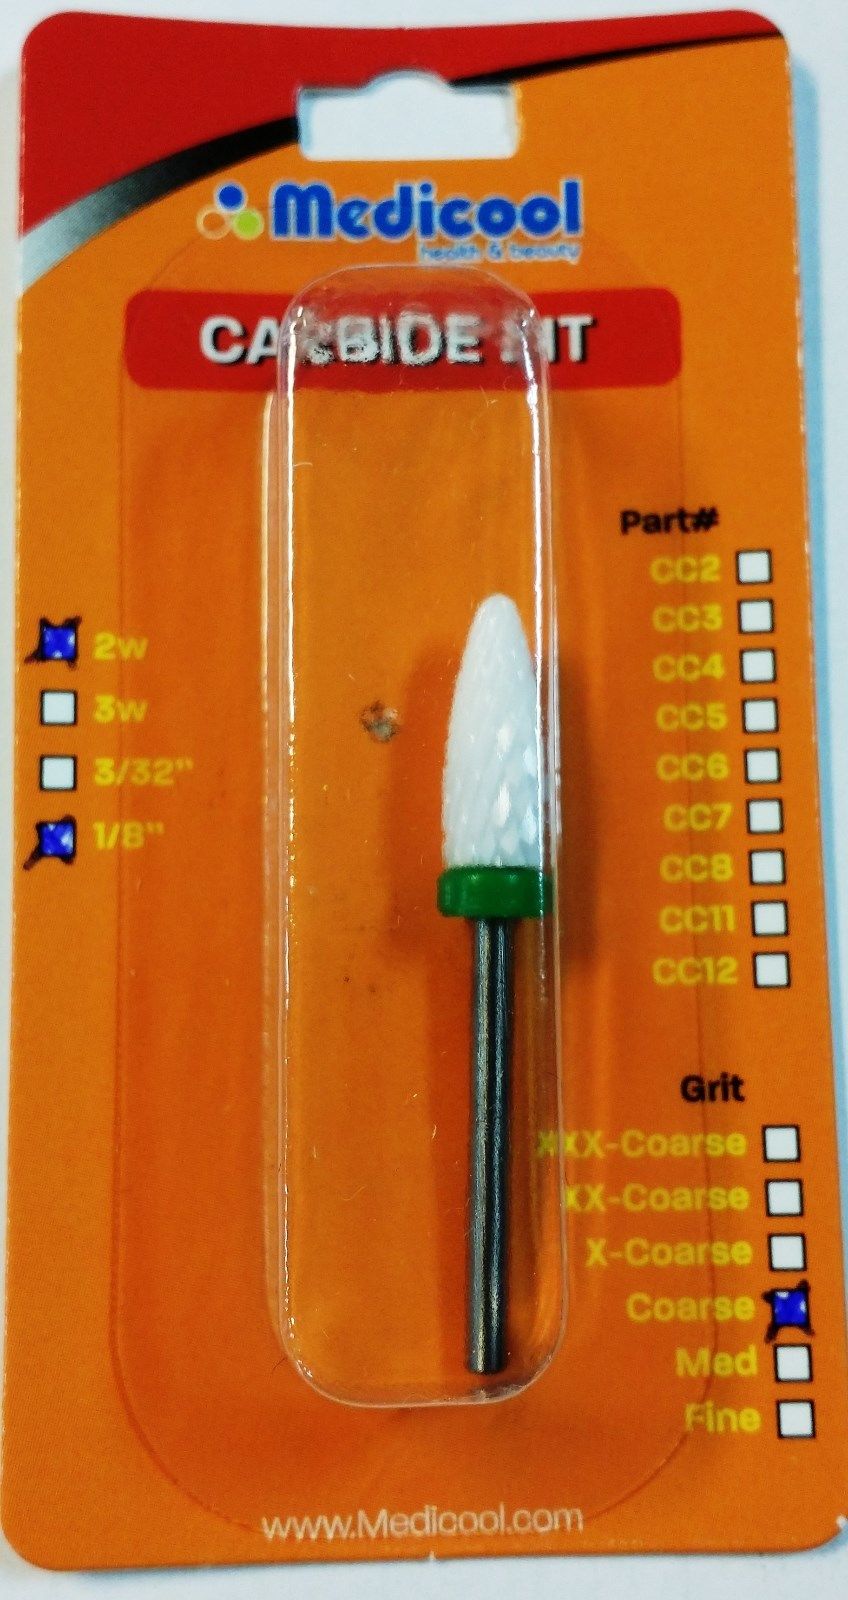 Medicool - Ceramic Drill Bit - Cone Shape (CC18) - Choose your Grit